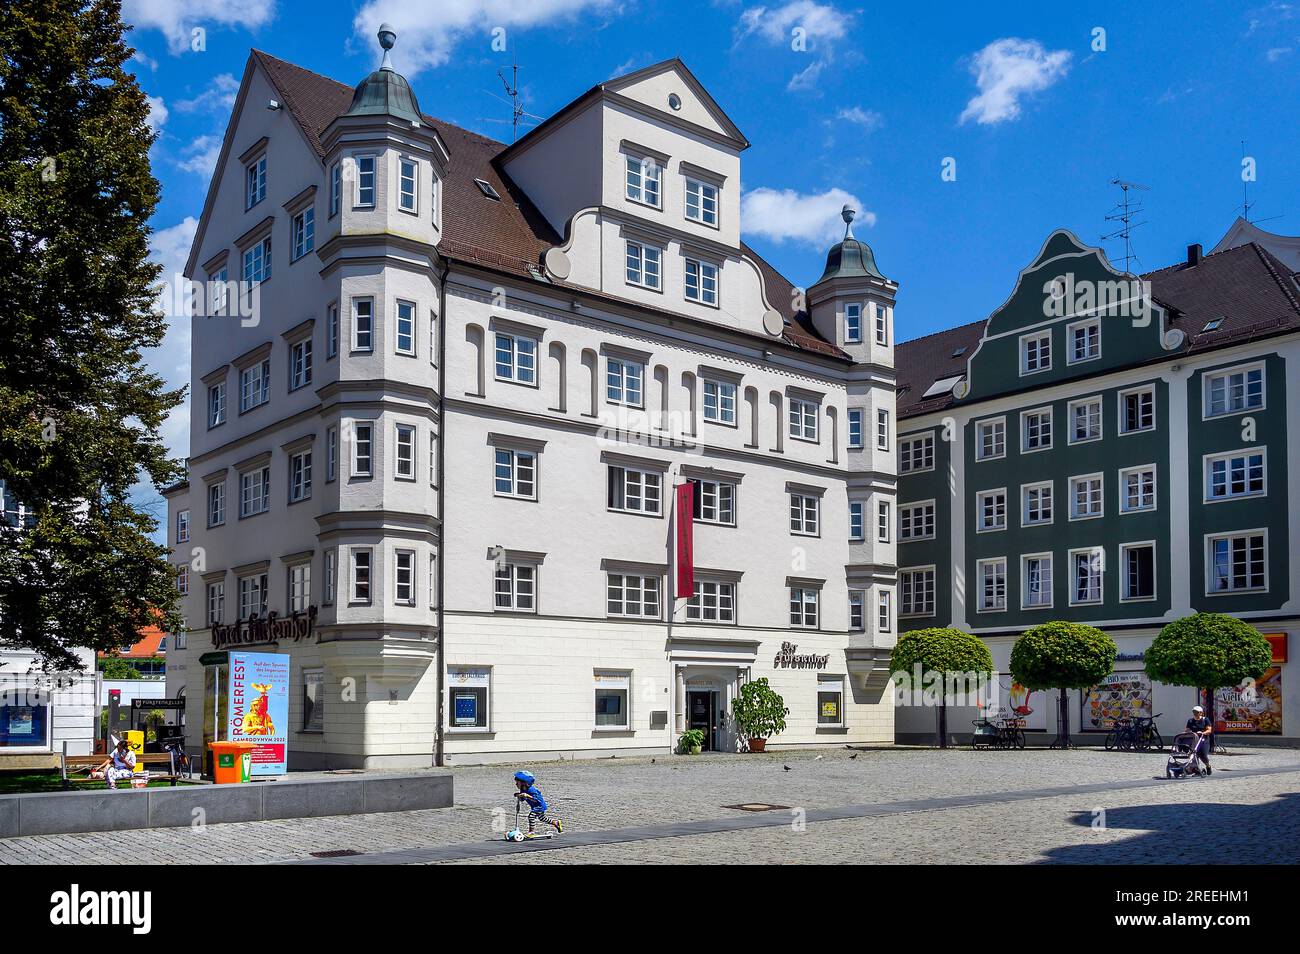 Hotel, royal court, heritage-protected building, Kempten, Allgaeu, Bavaria, Germany Stock Photo